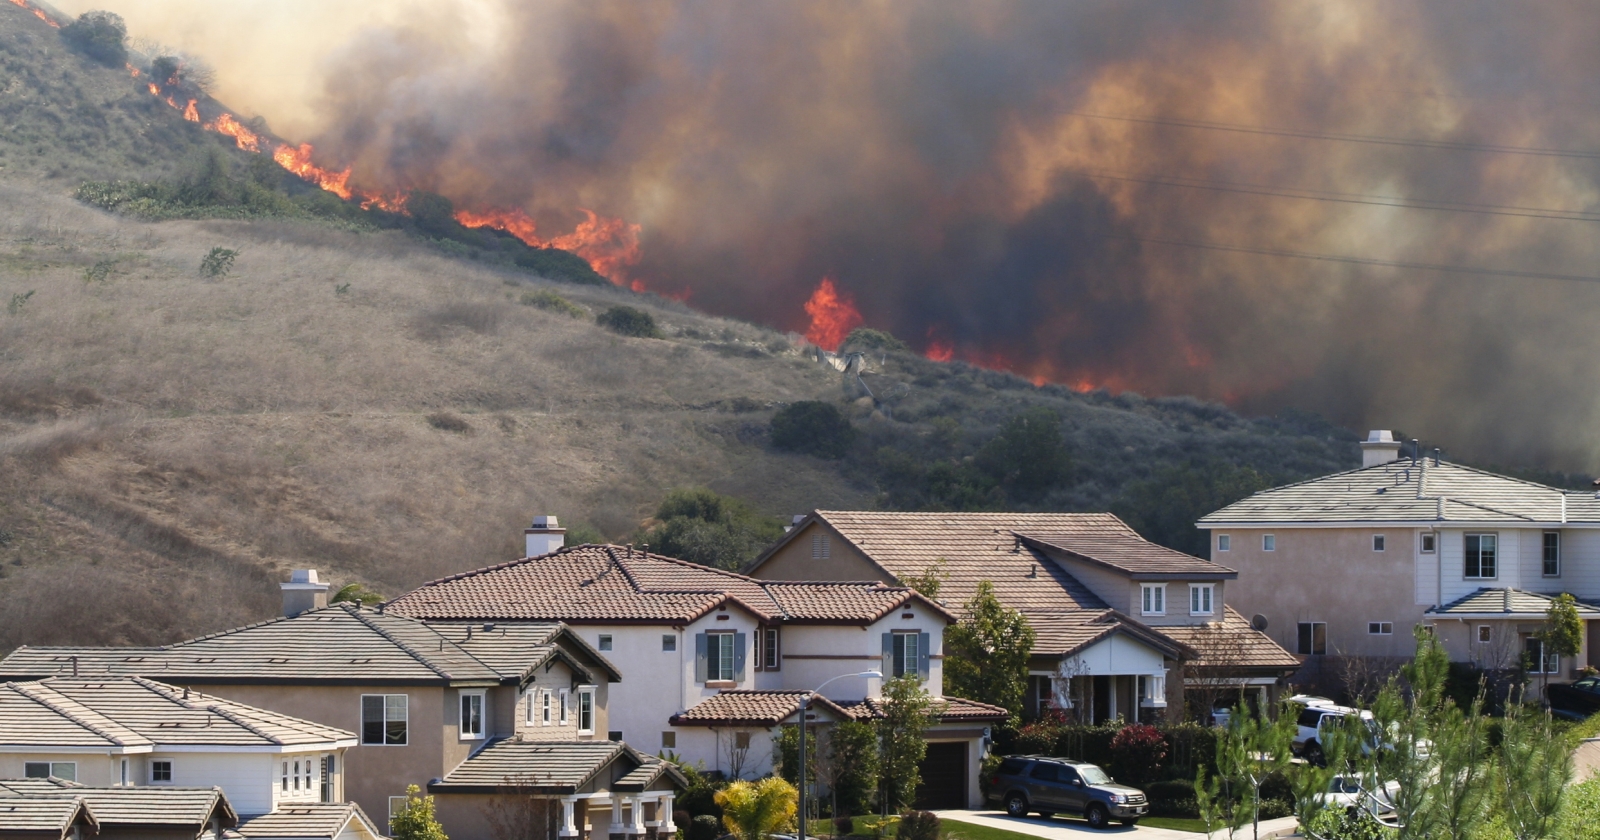 Wildfire near houses